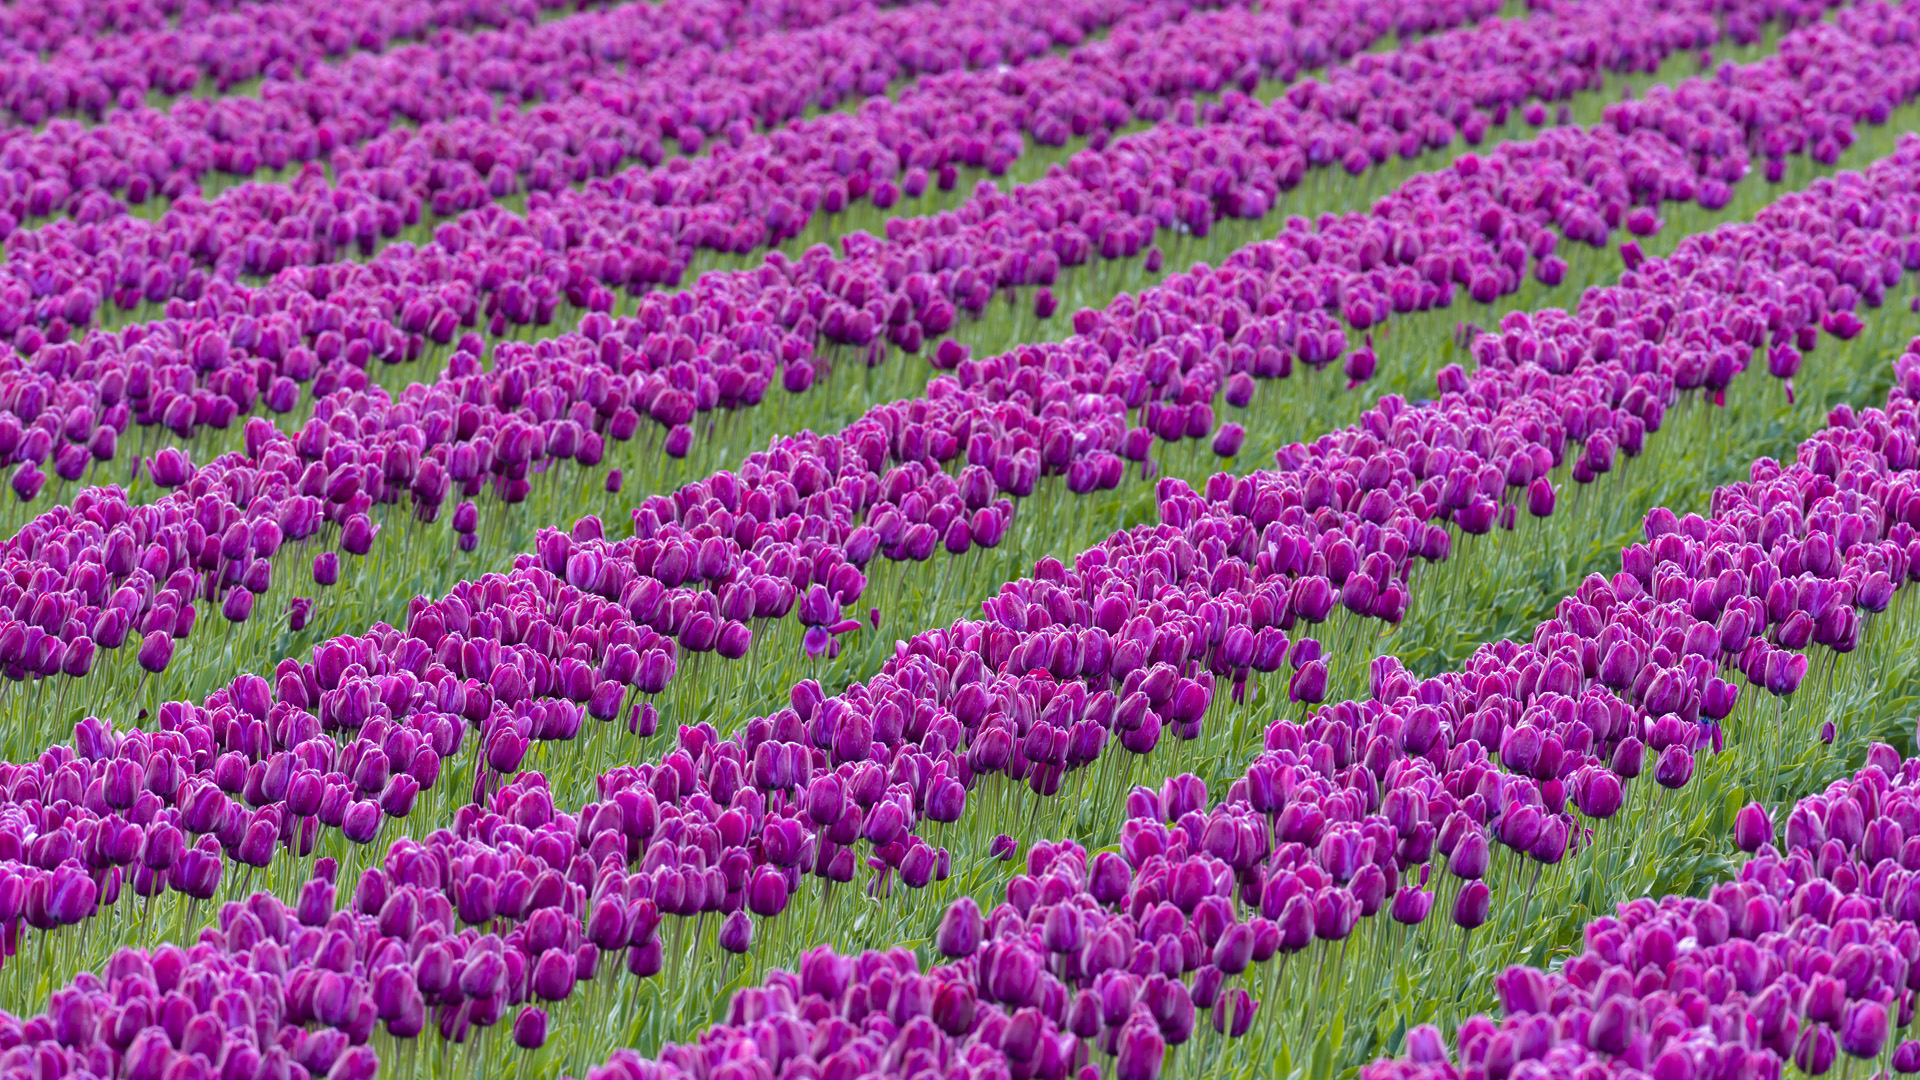 Purple Tulips Wallpaper 261 1920 x 1080